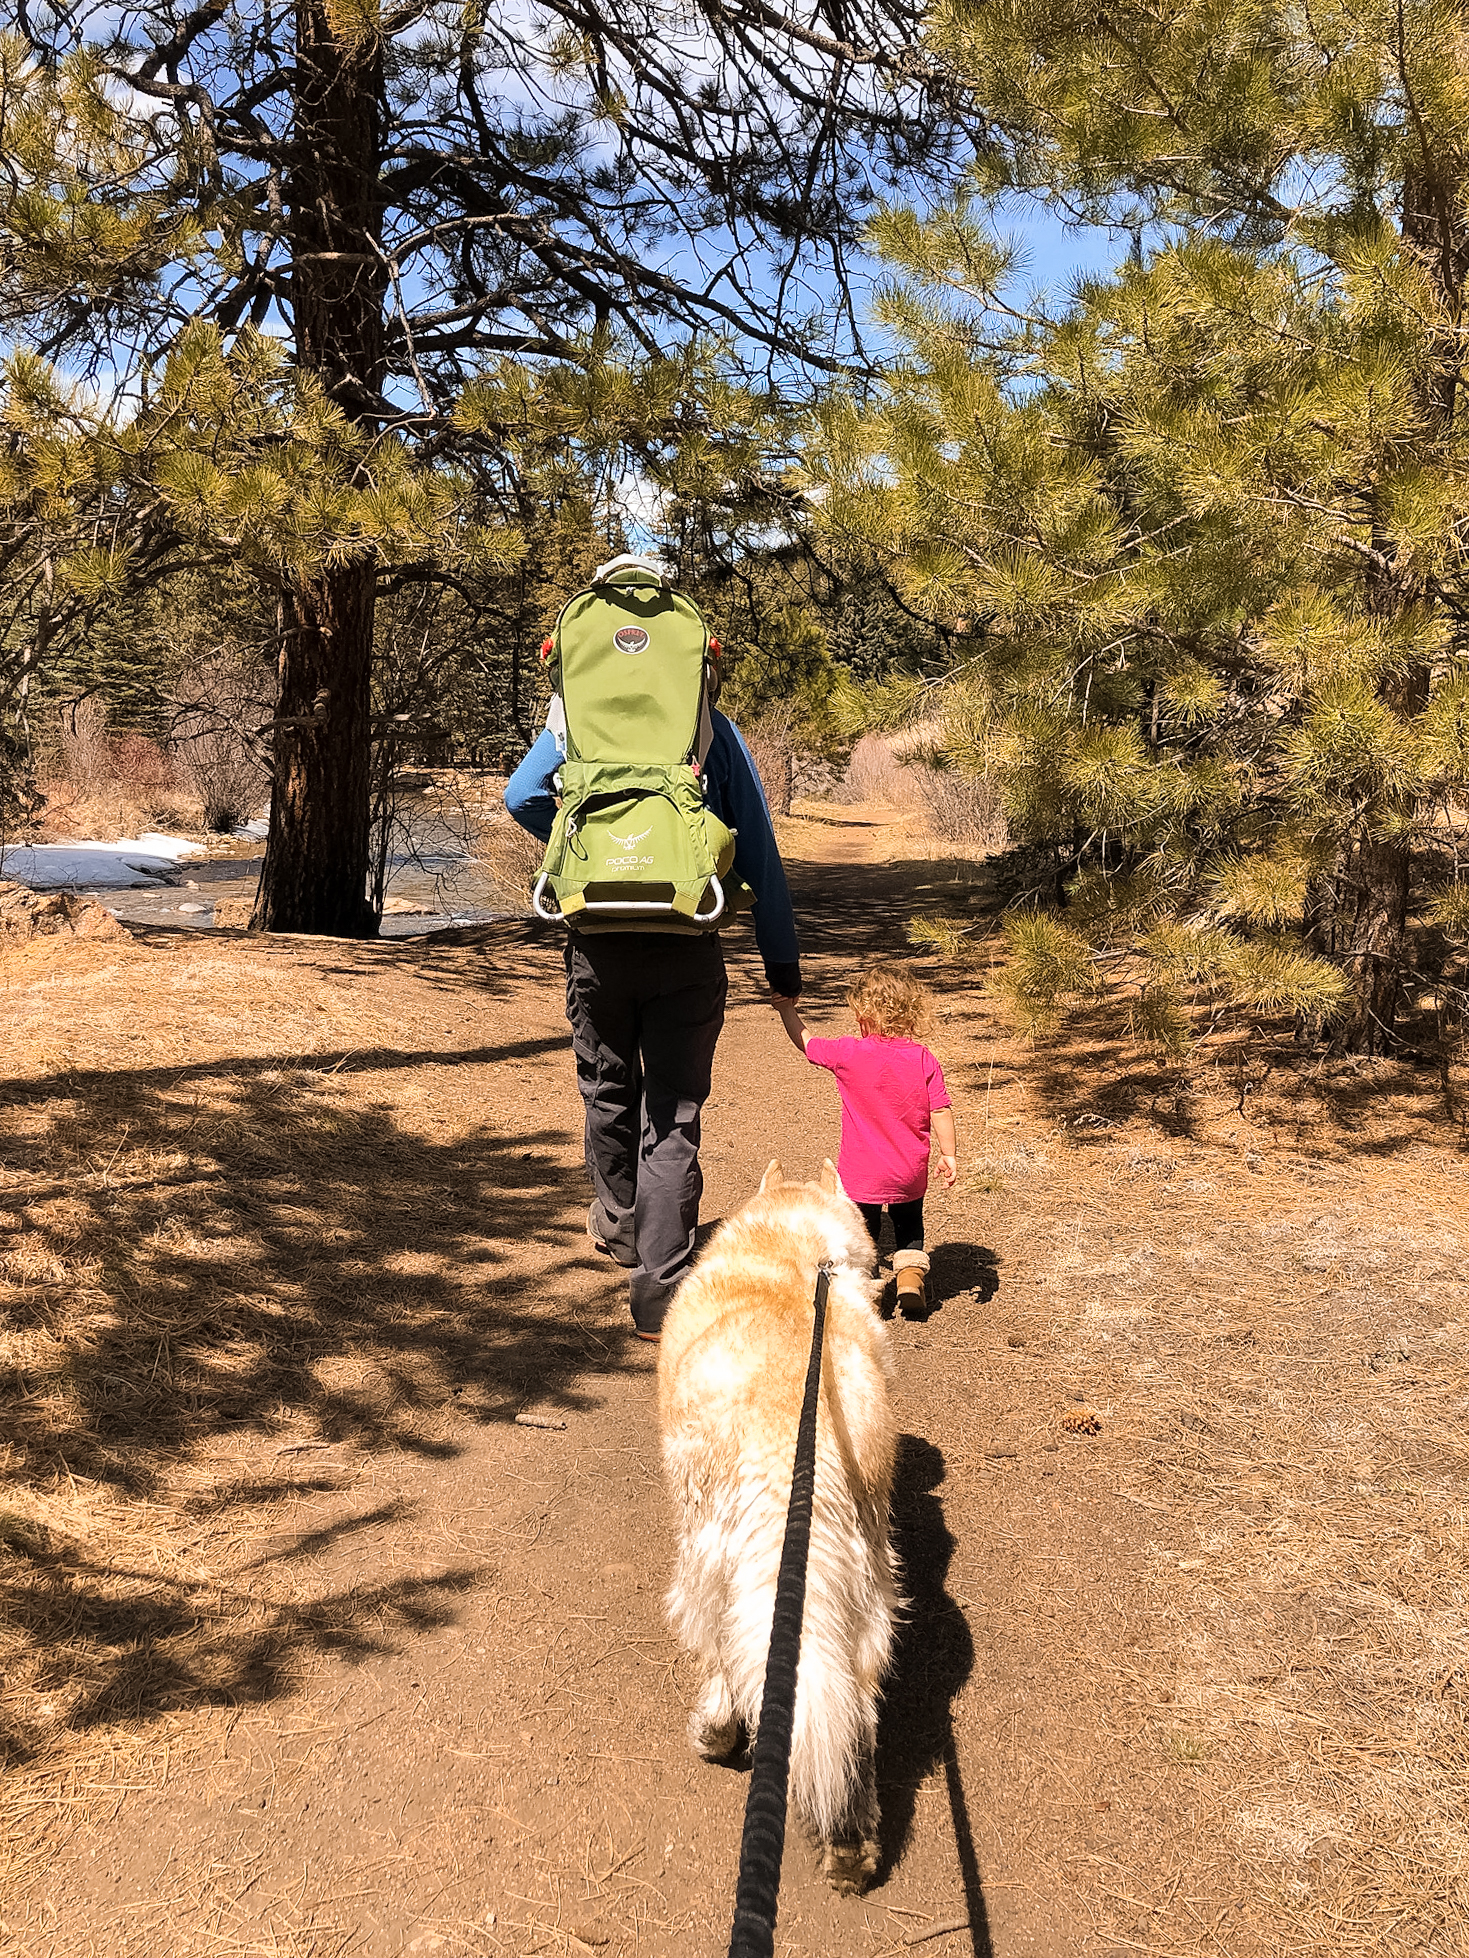 Brad, daughter, and dog hiking